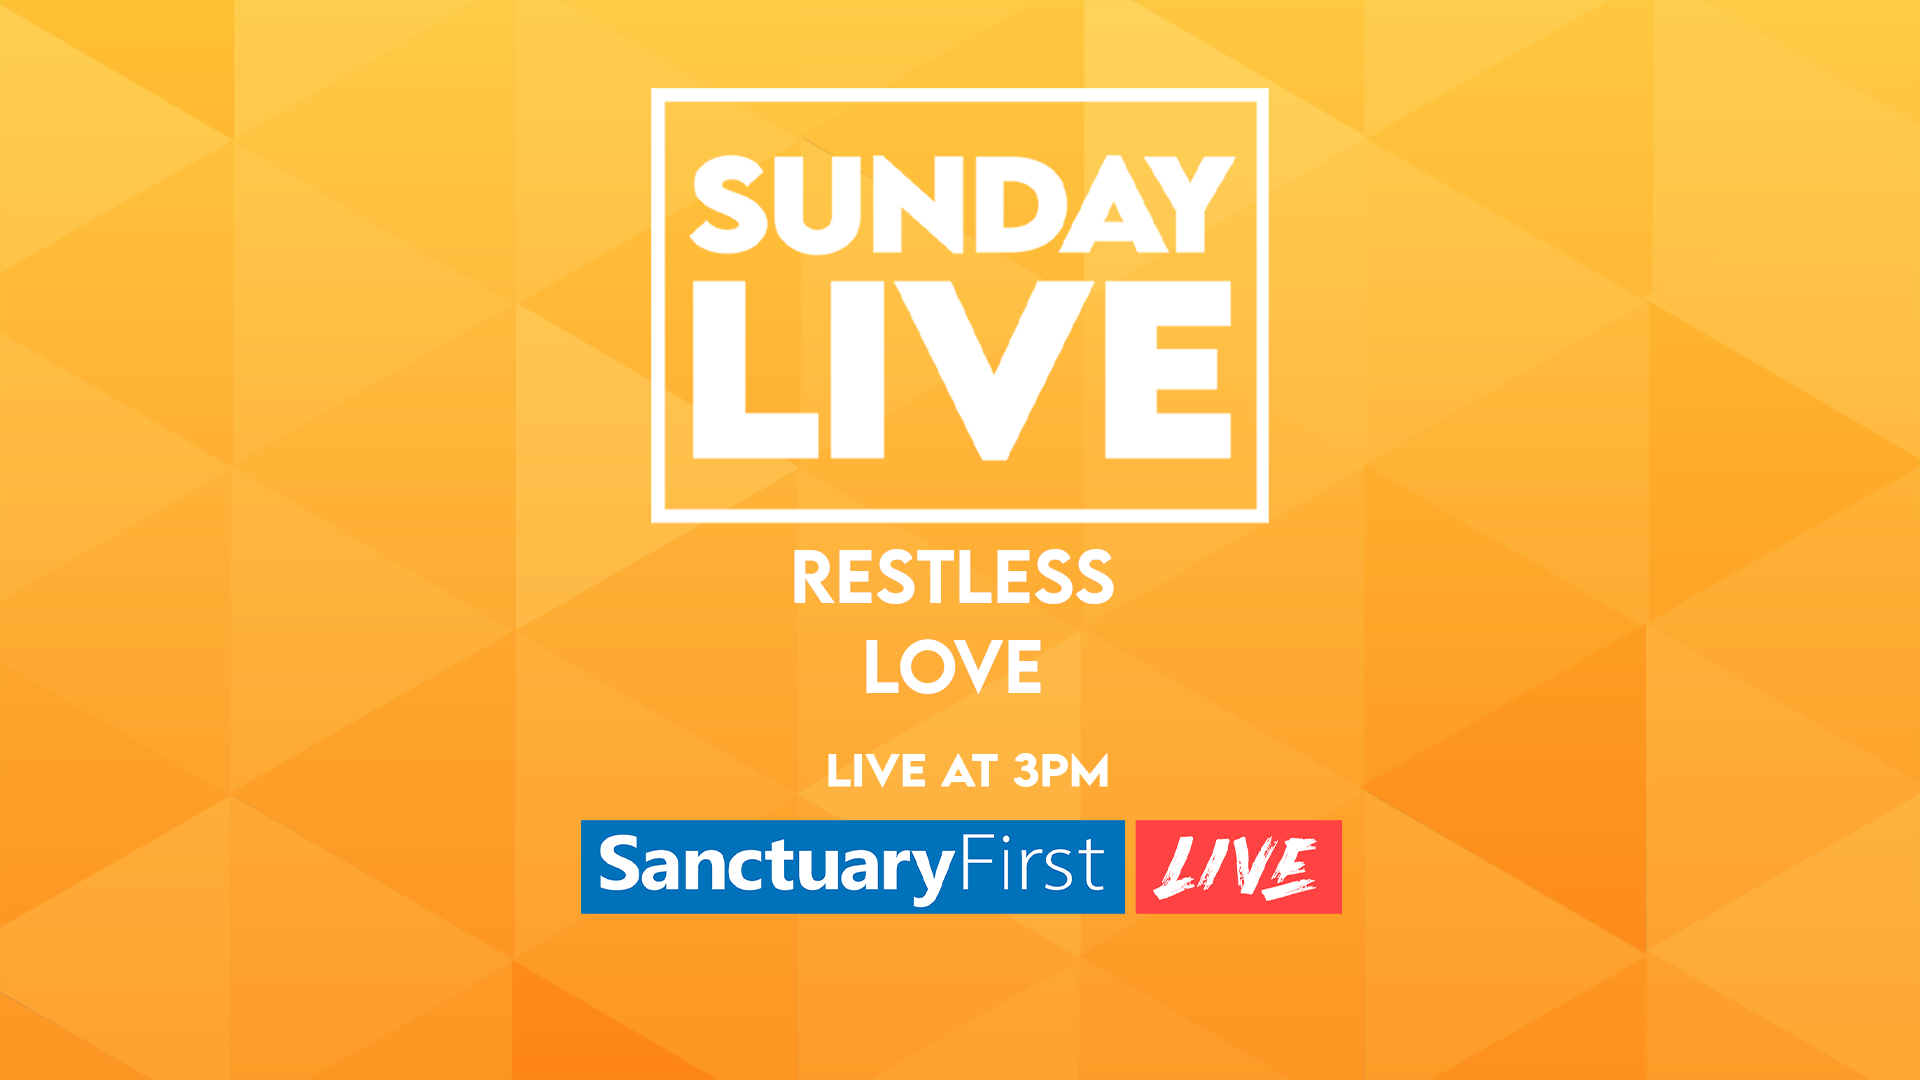 Sunday Live - Restless Love